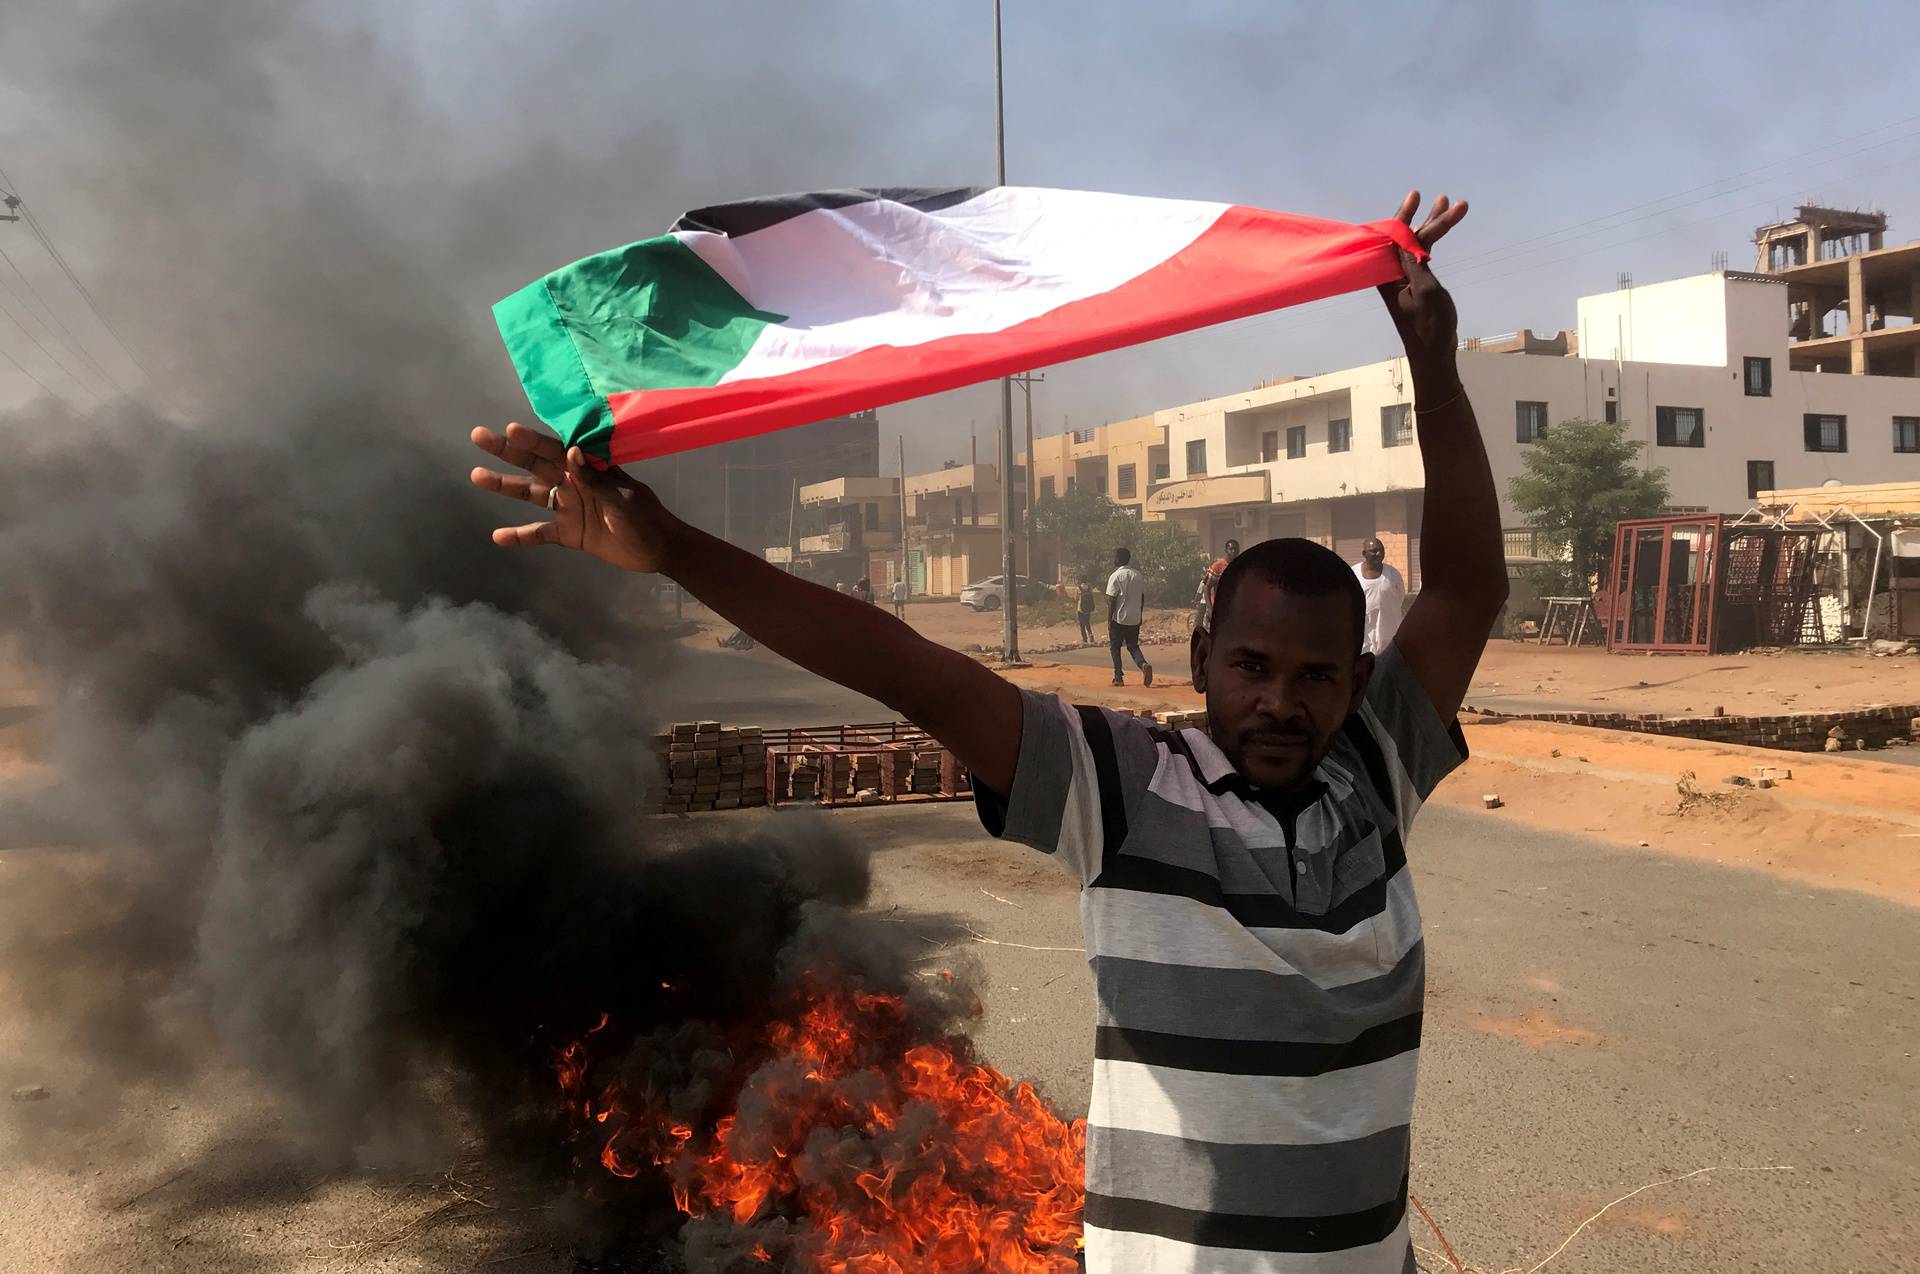 Protesters block a road in Khartoum